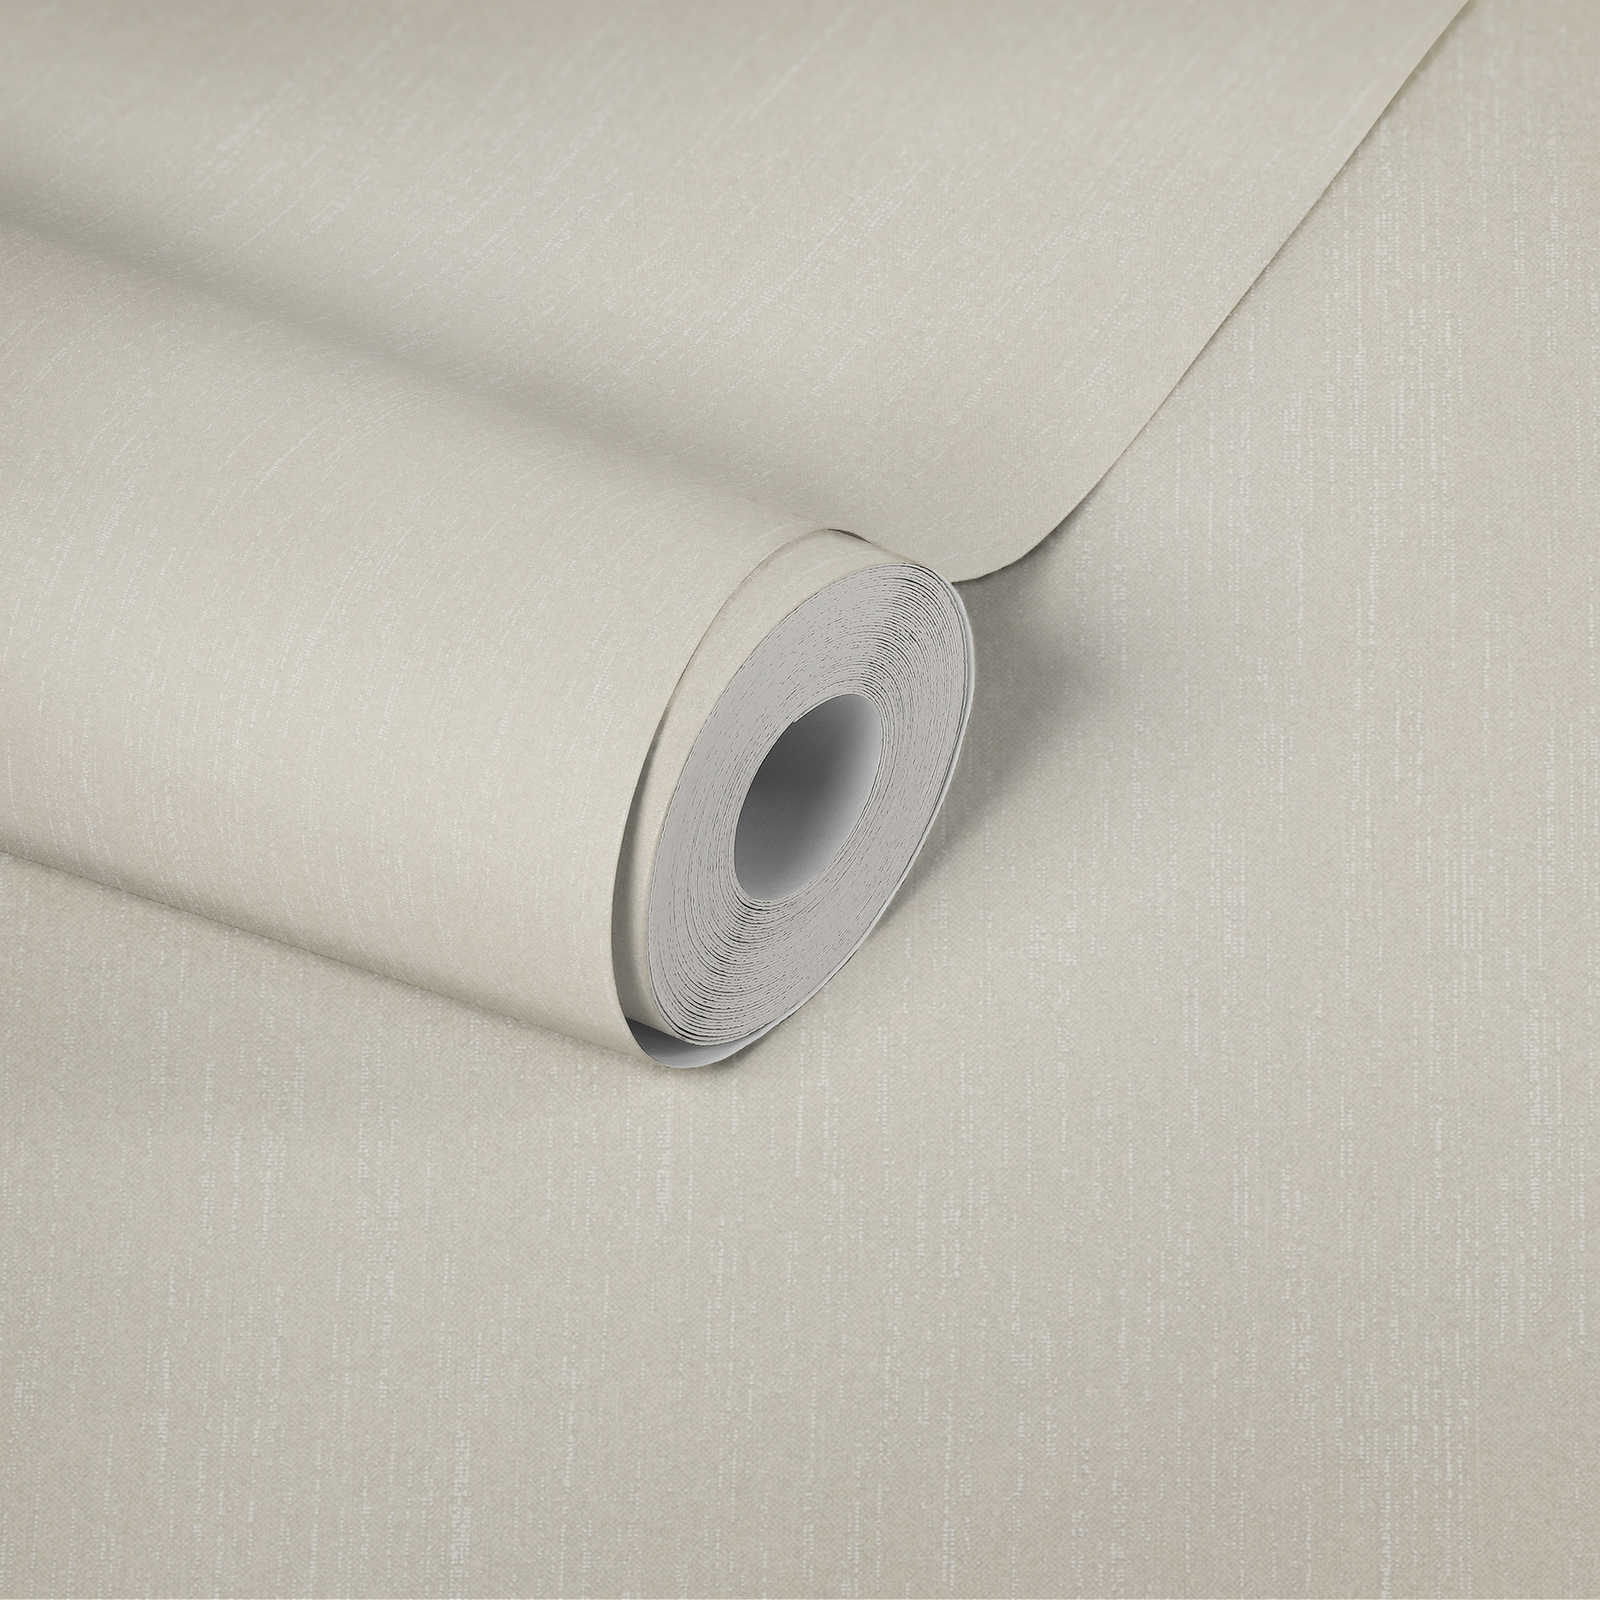             Gloss wallpaper cream white with textile optics & shimmer effect - white
        